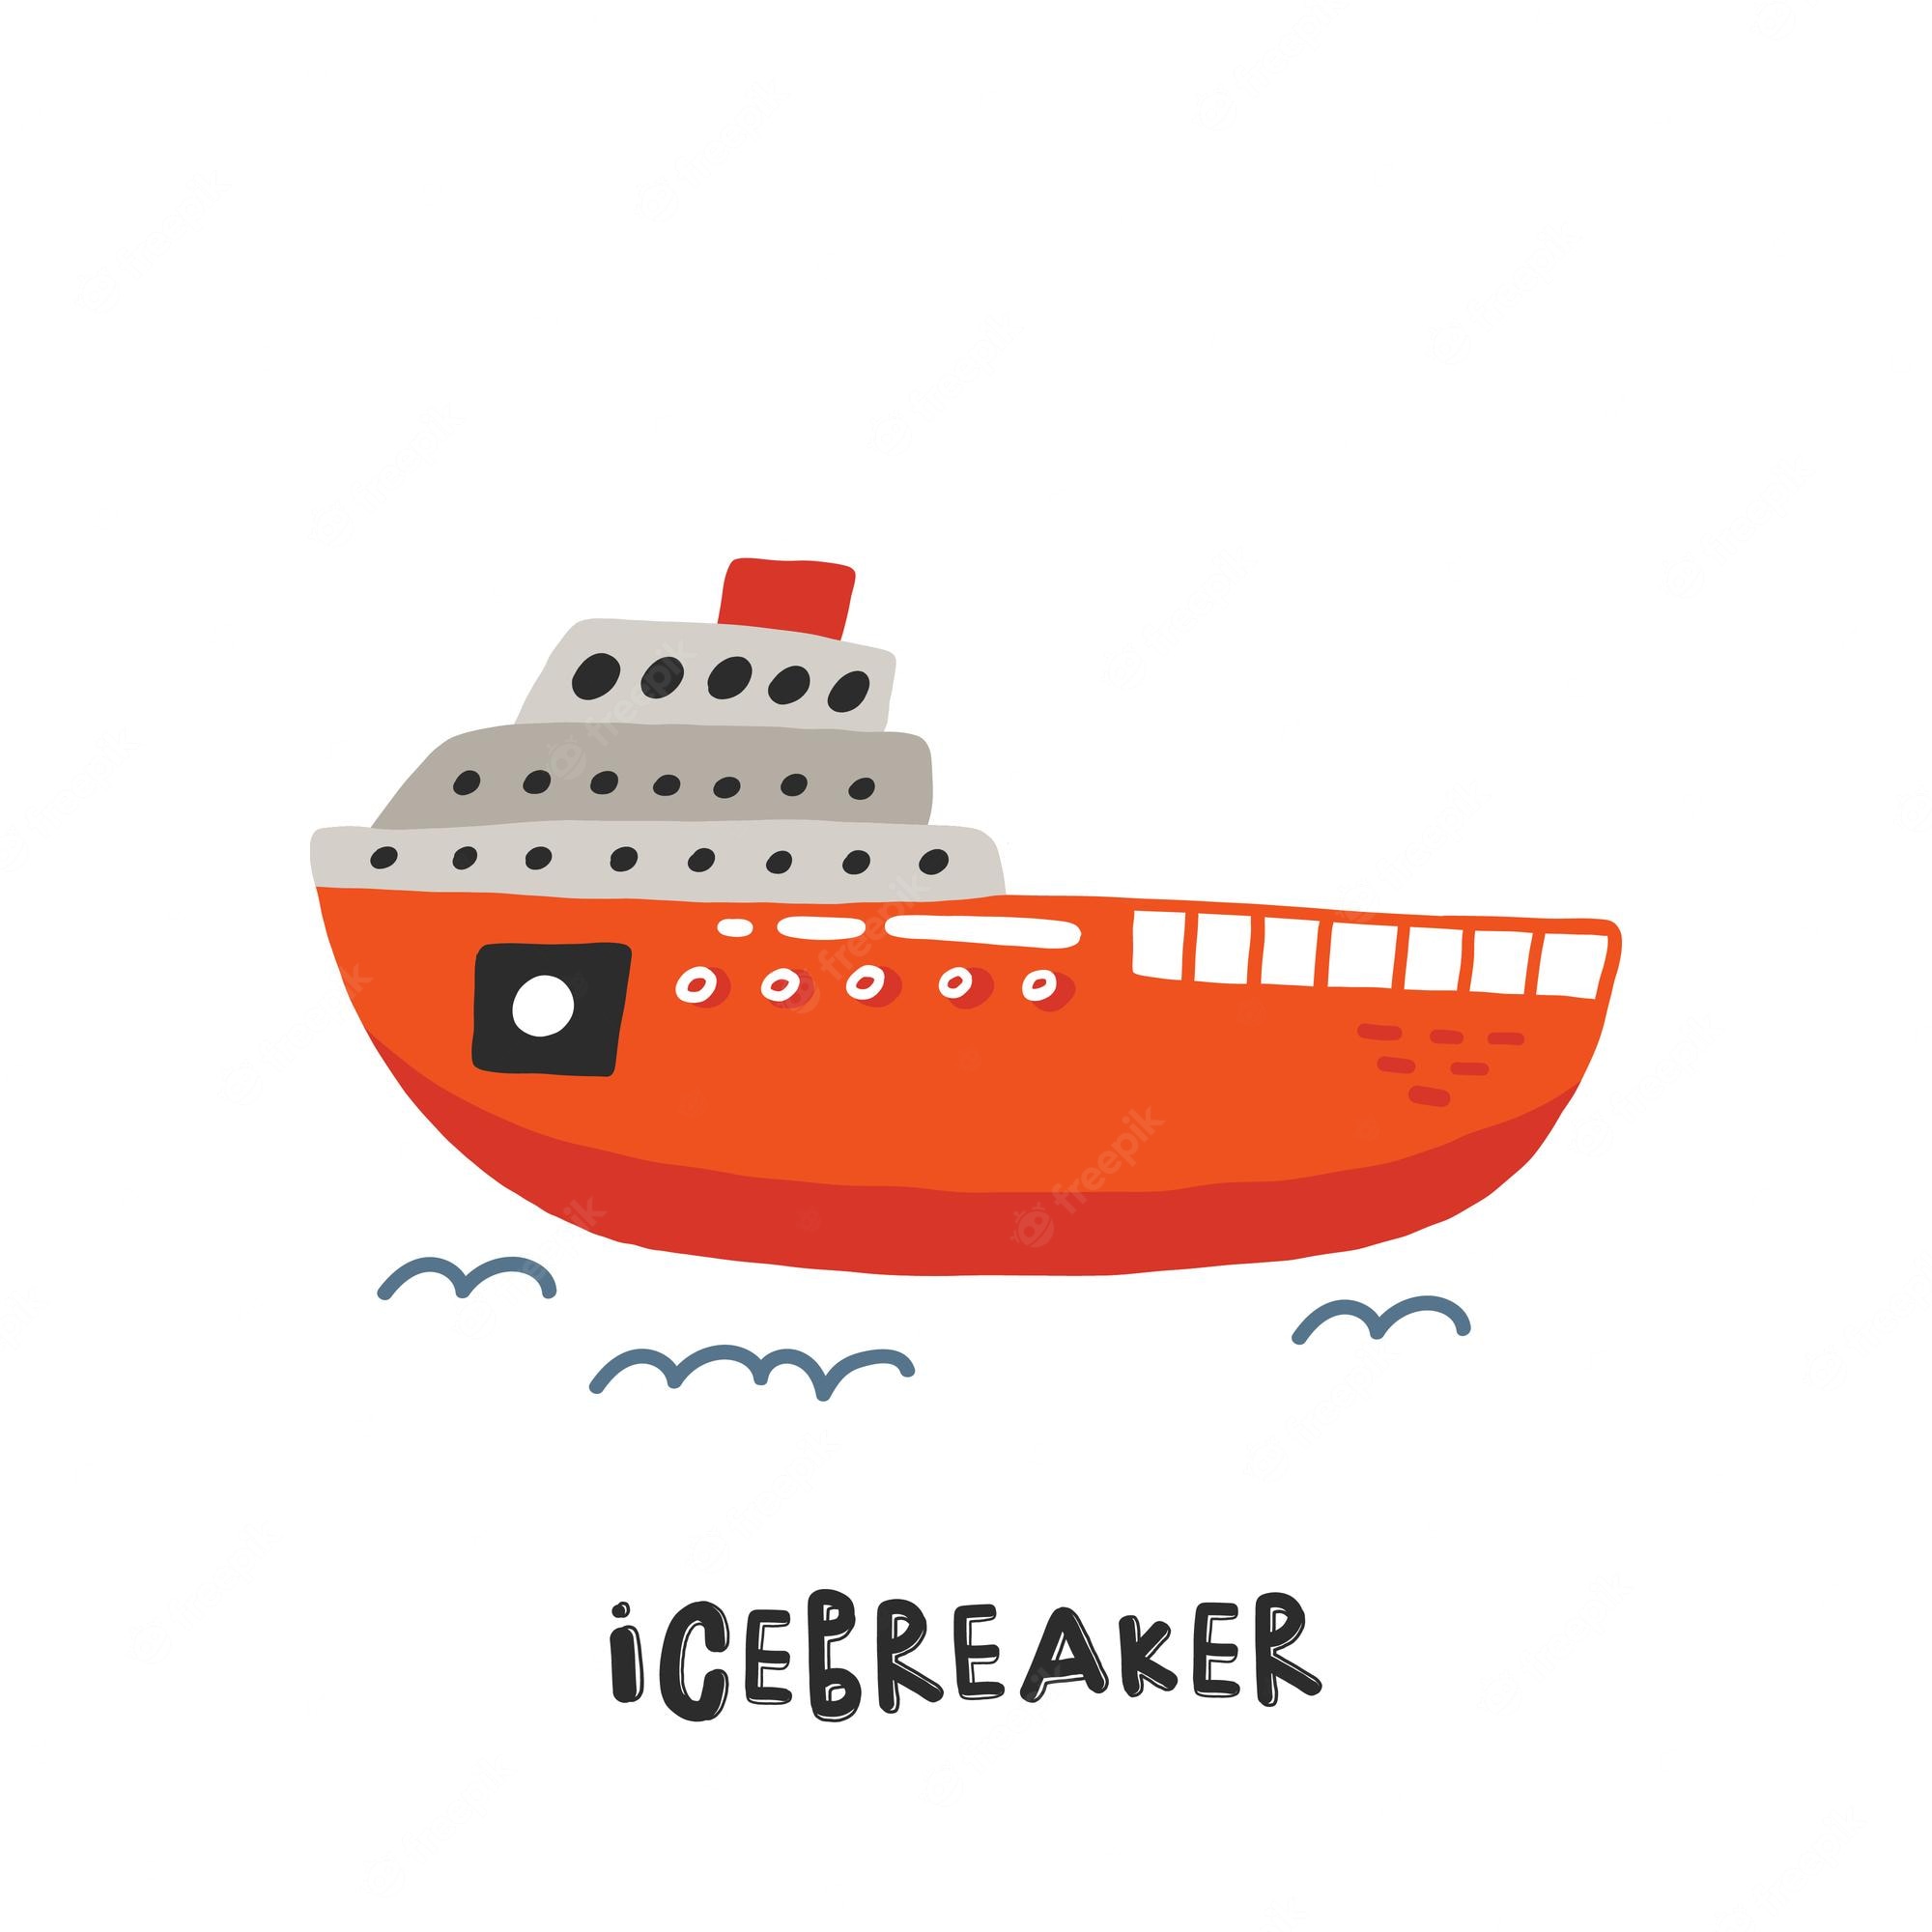 Icebreaker Image. Free Vectors, & PSD